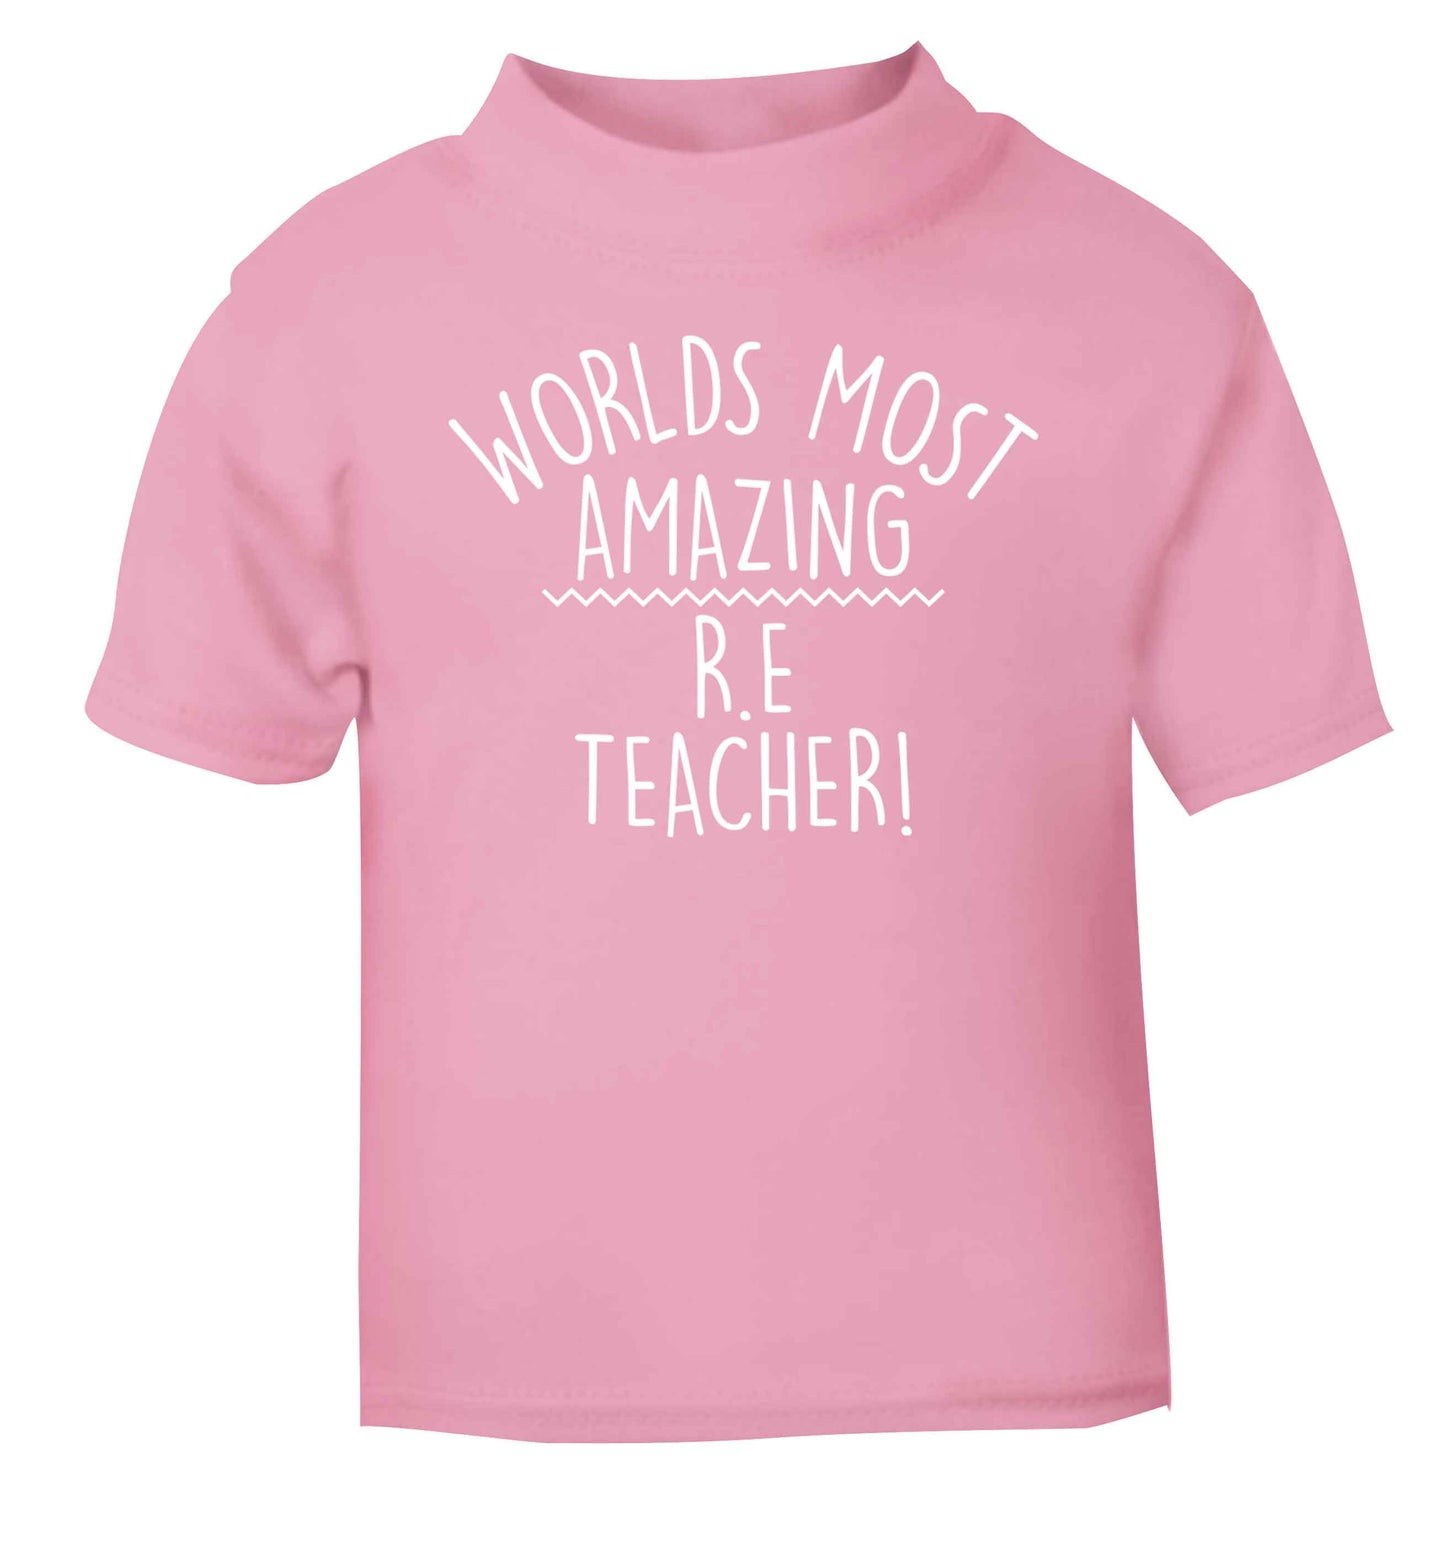 Worlds most amazing R.E teacher light pink baby toddler Tshirt 2 Years